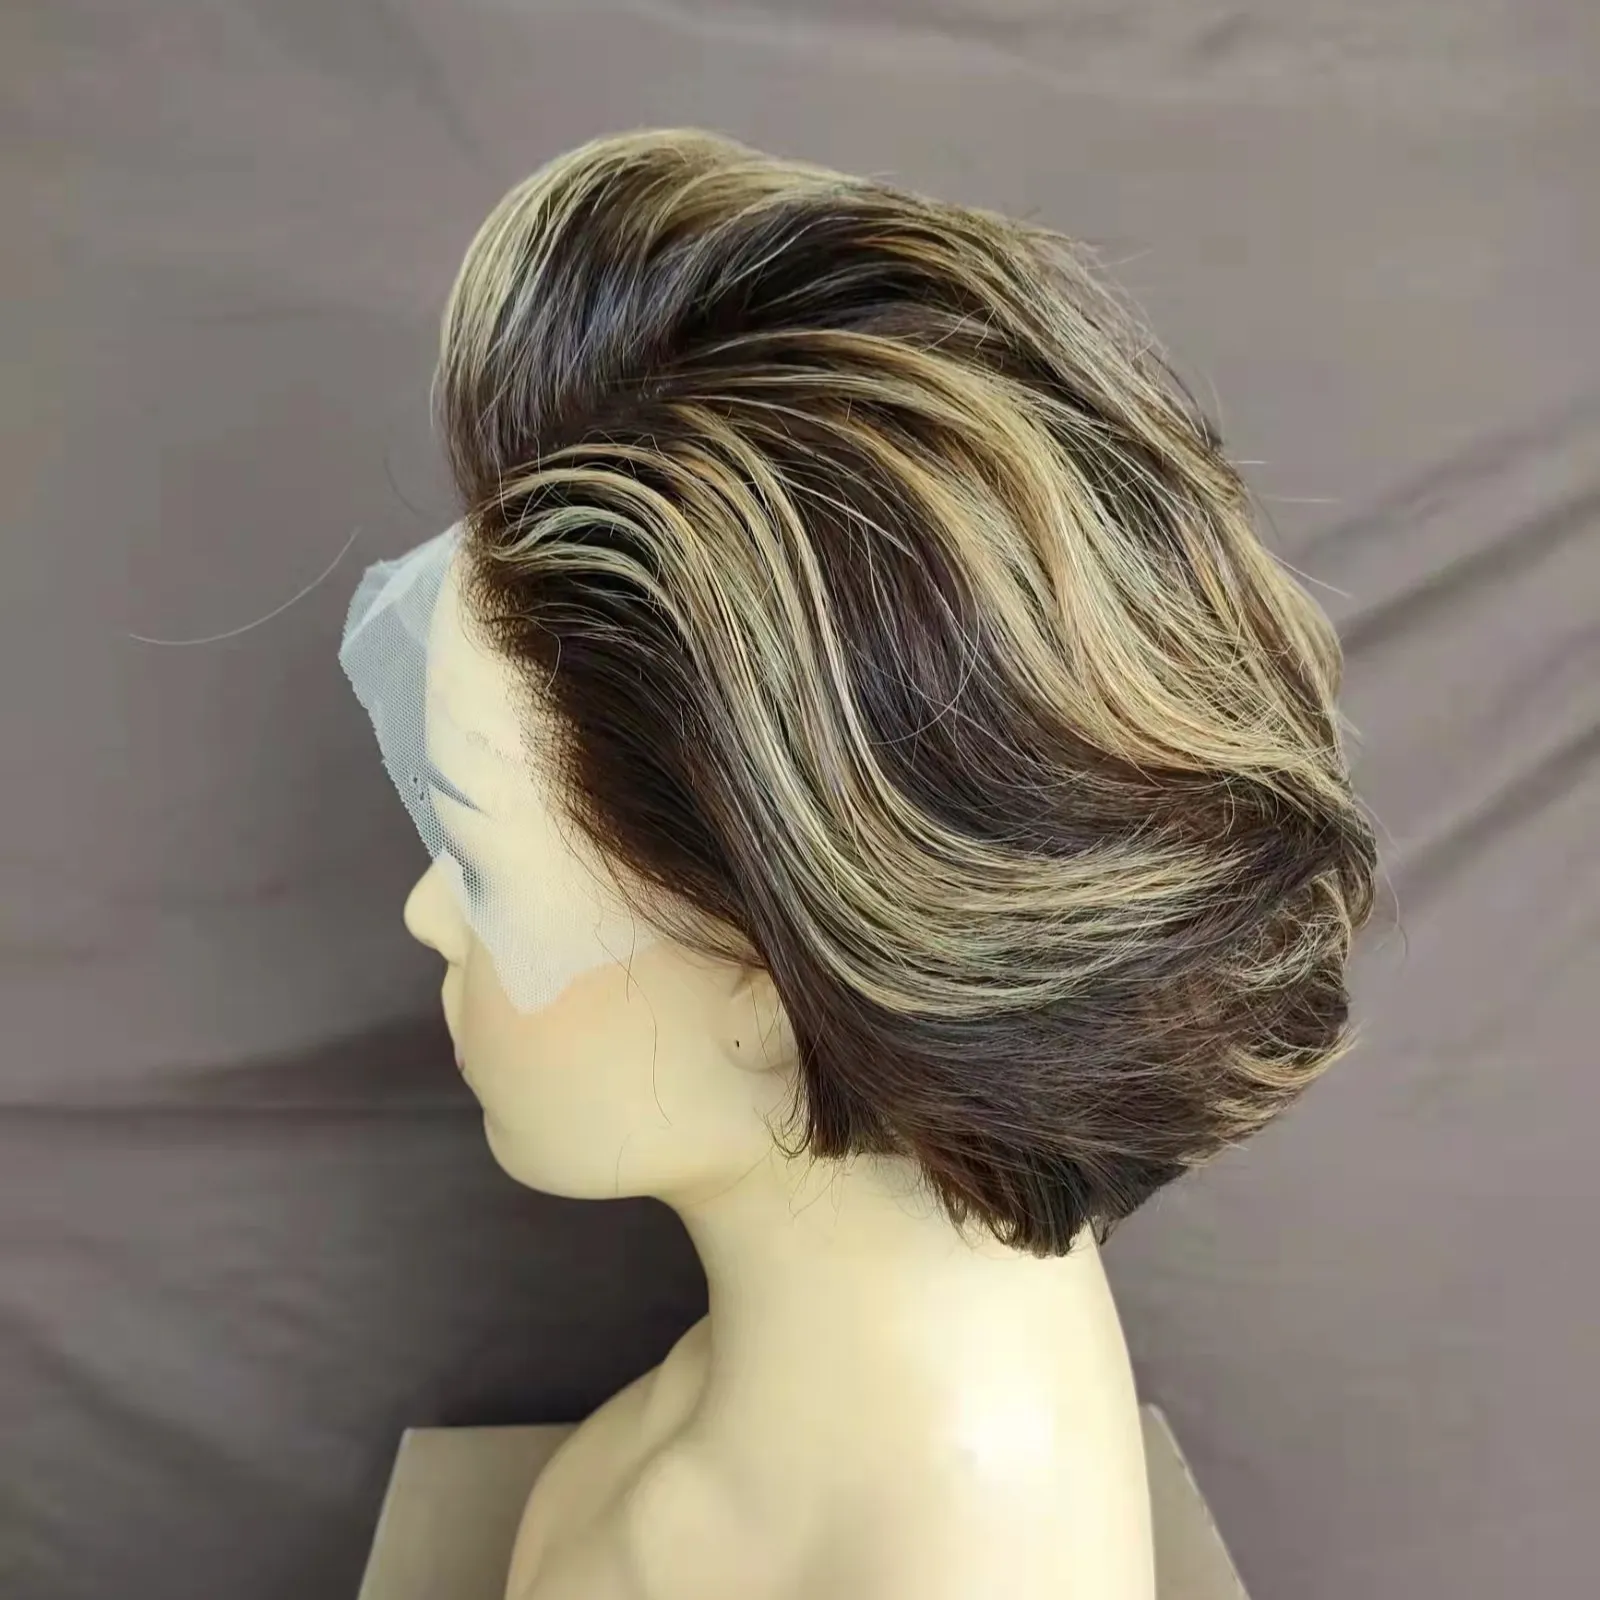 Amara fast delivery closure pixie wigs wholesale price peruque pixi ombre colored short bob cut lace front wig in stock